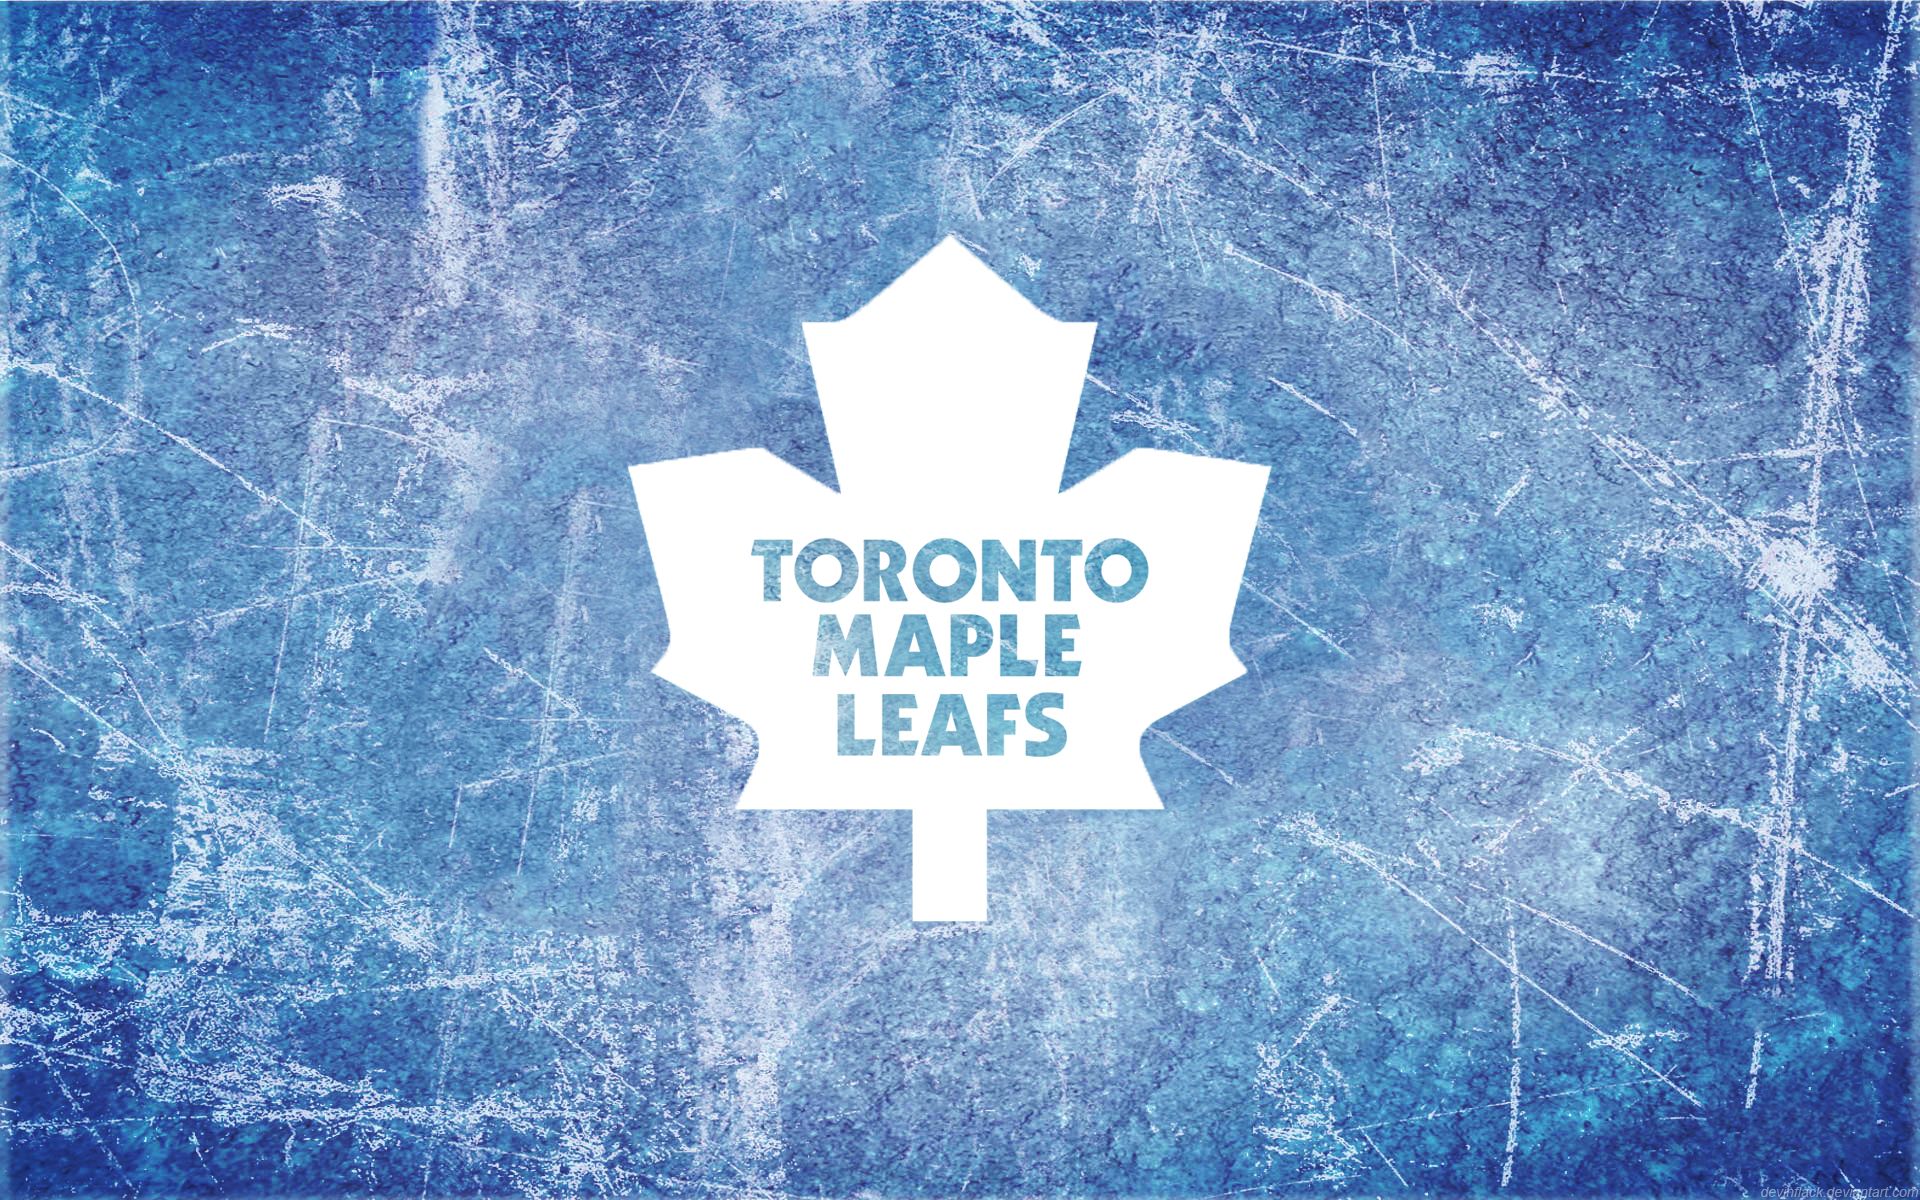 Toronto Maple Leafs - Stanley Cup | Stephen Clark (sgclark.com)